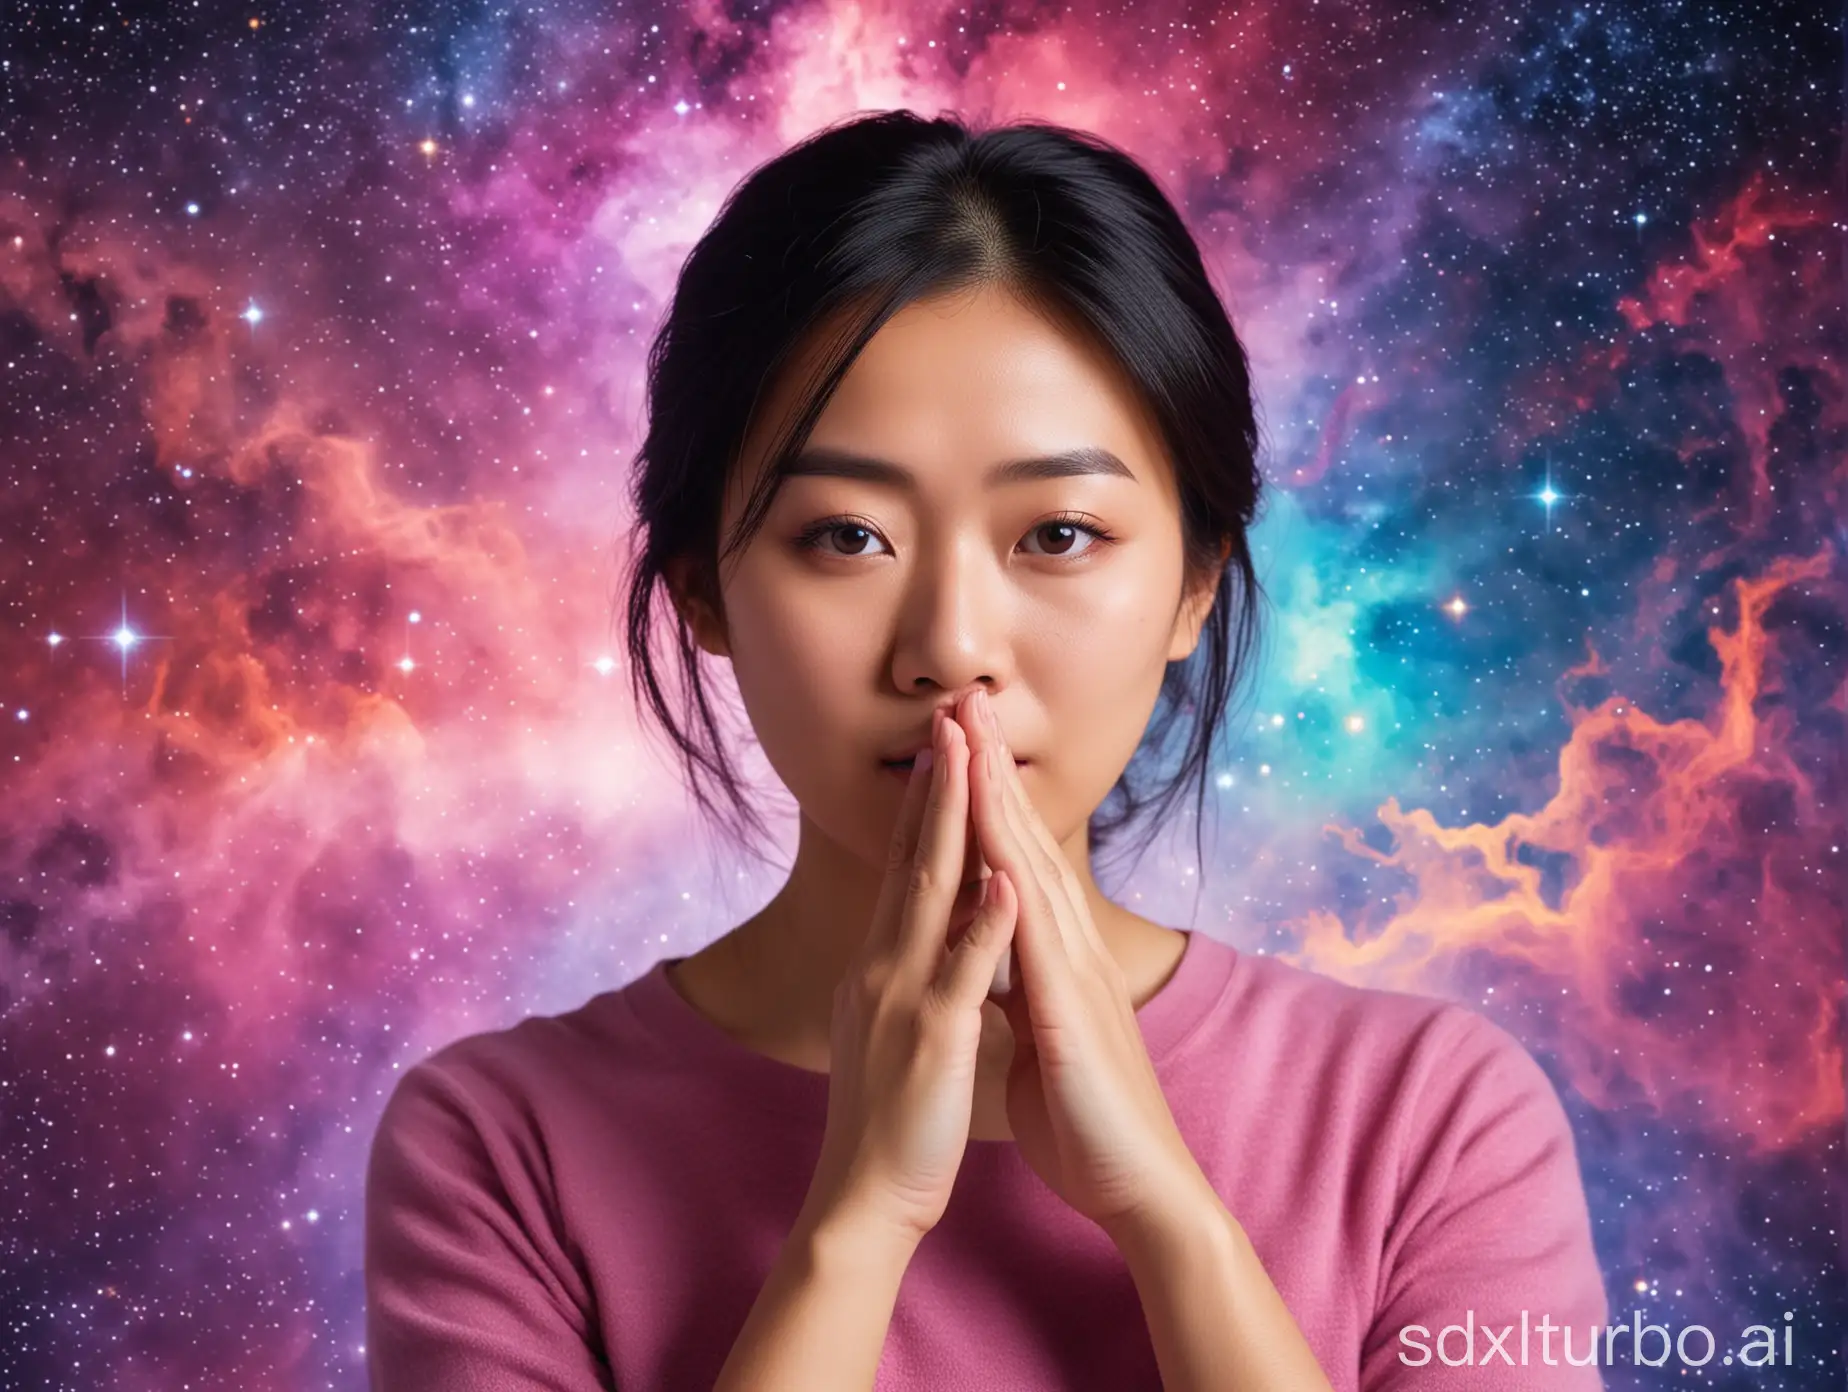 Asian-Female-Making-Silence-Gesture-in-Nebula-Background